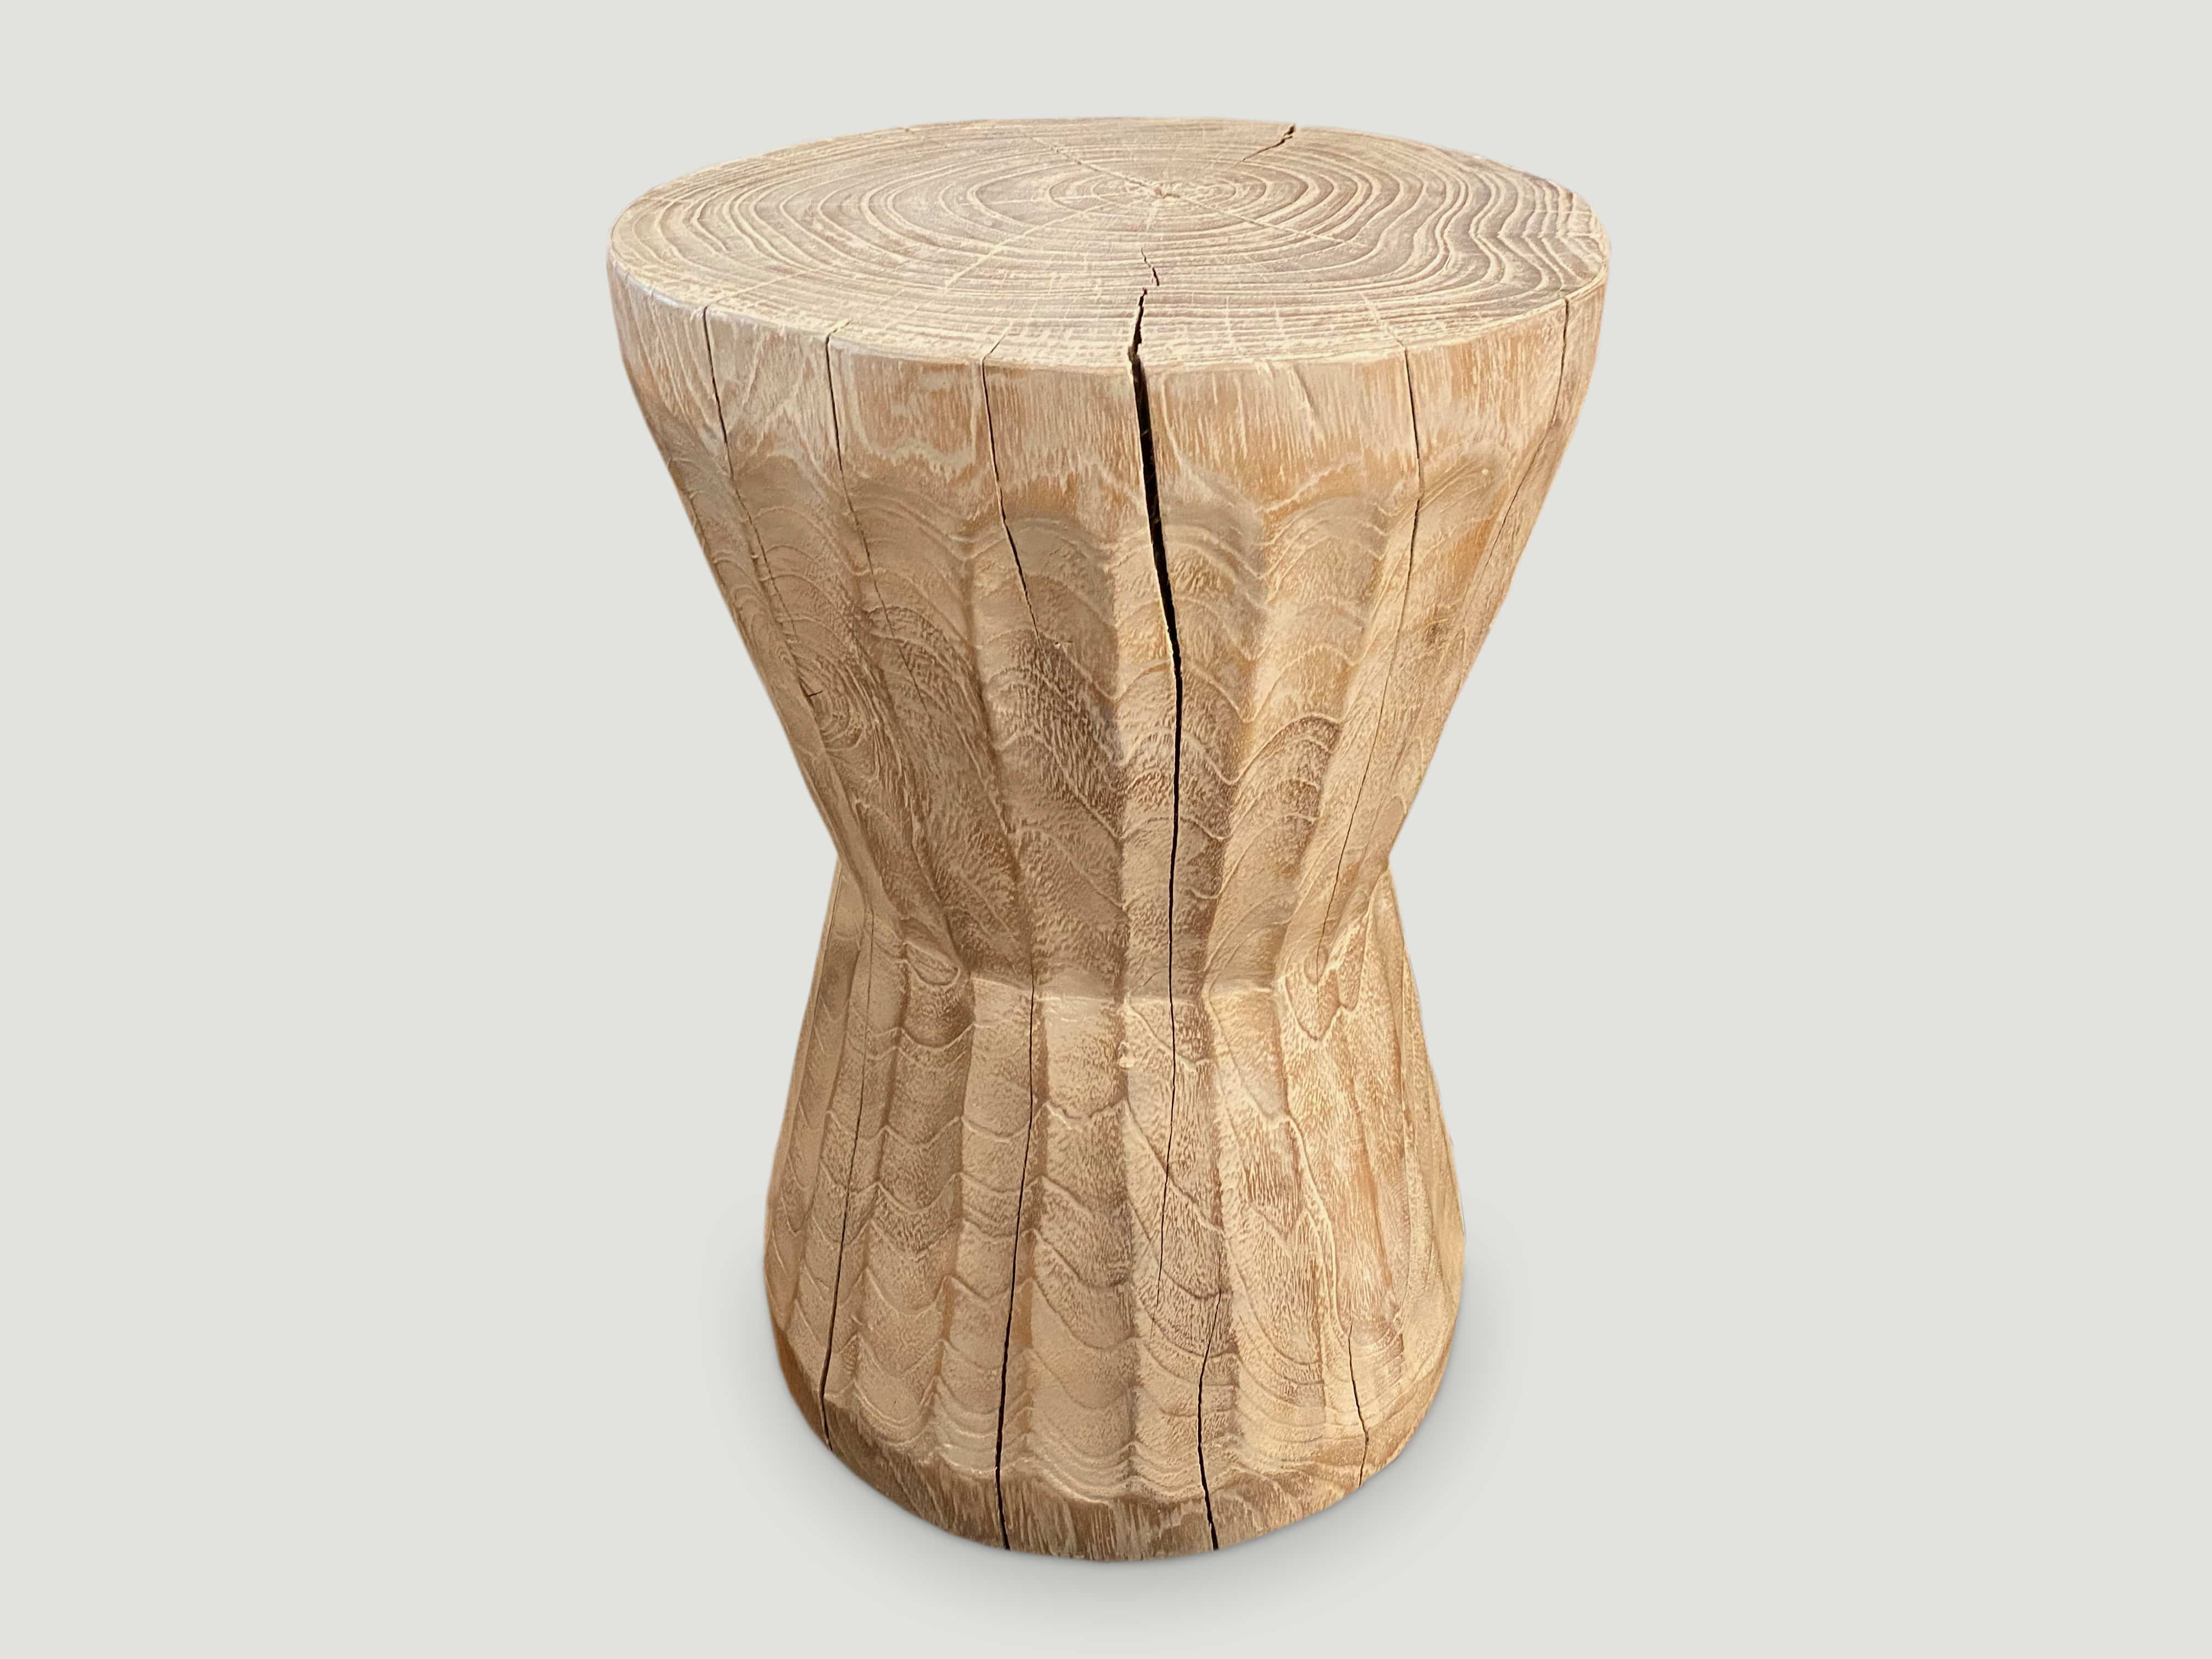 bevelled teak wood side table or stool